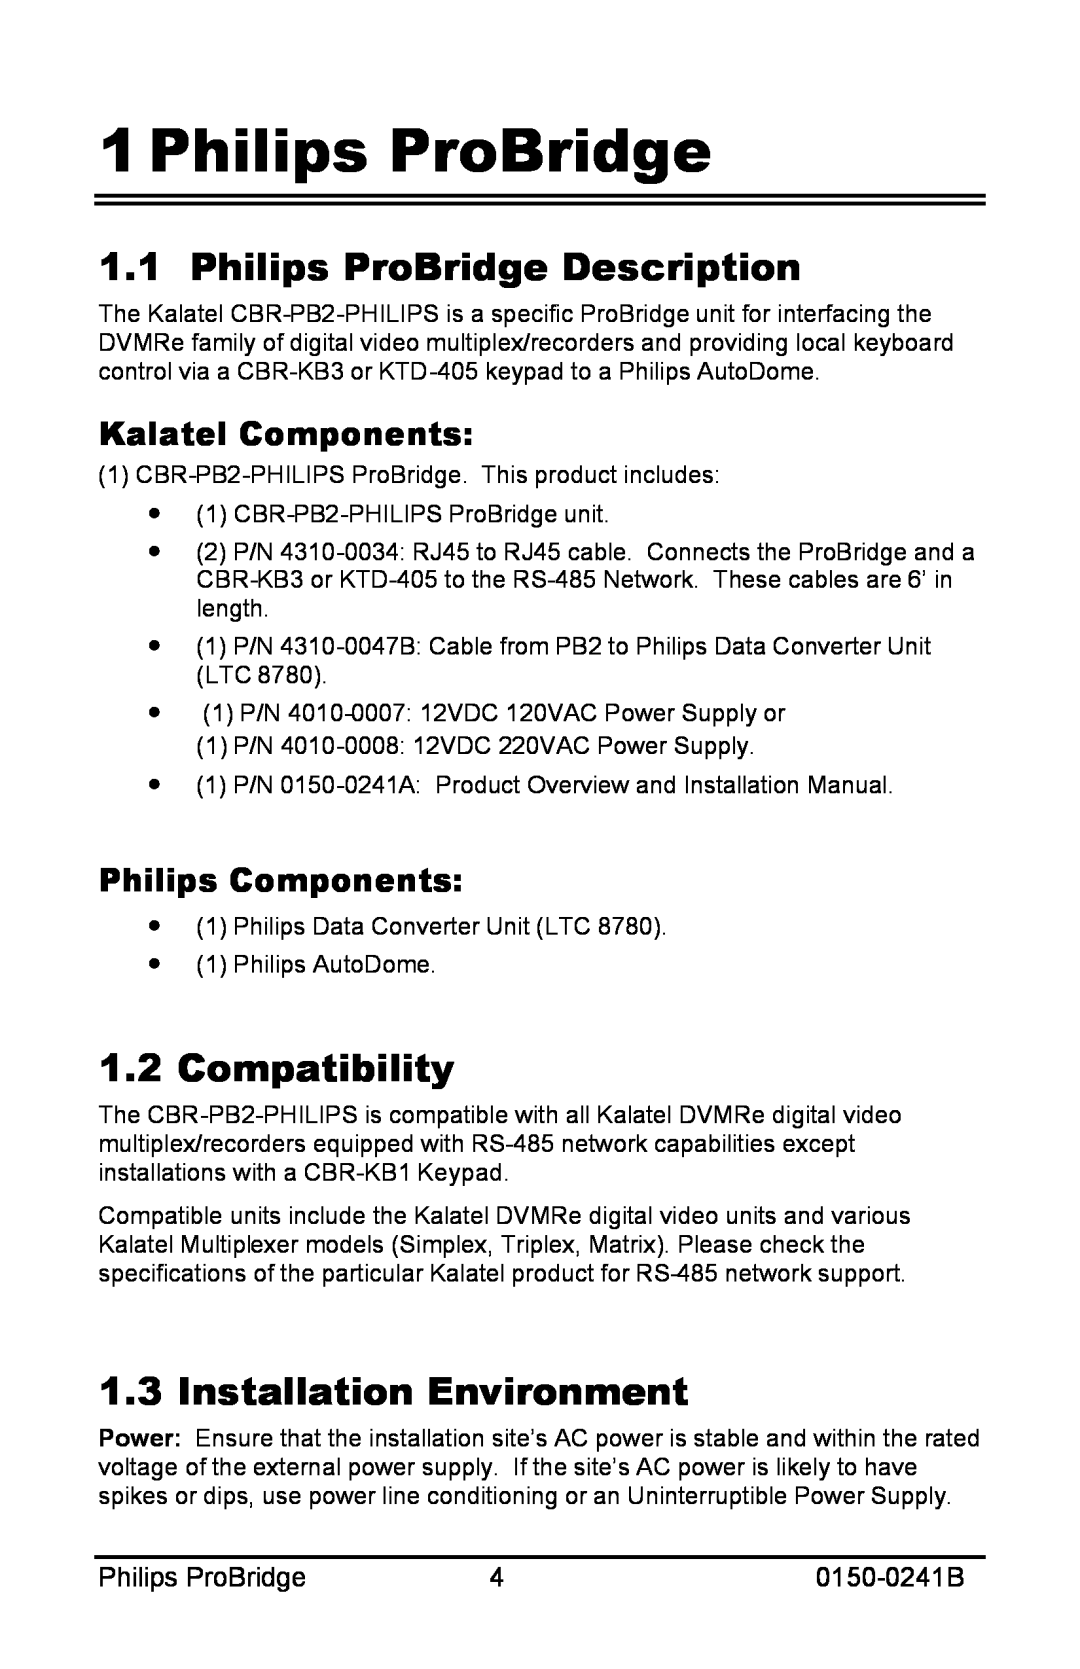 Philips 0150-0241B Philips ProBridge Description, Compatibility, Installation Environment, Kalatel Components 